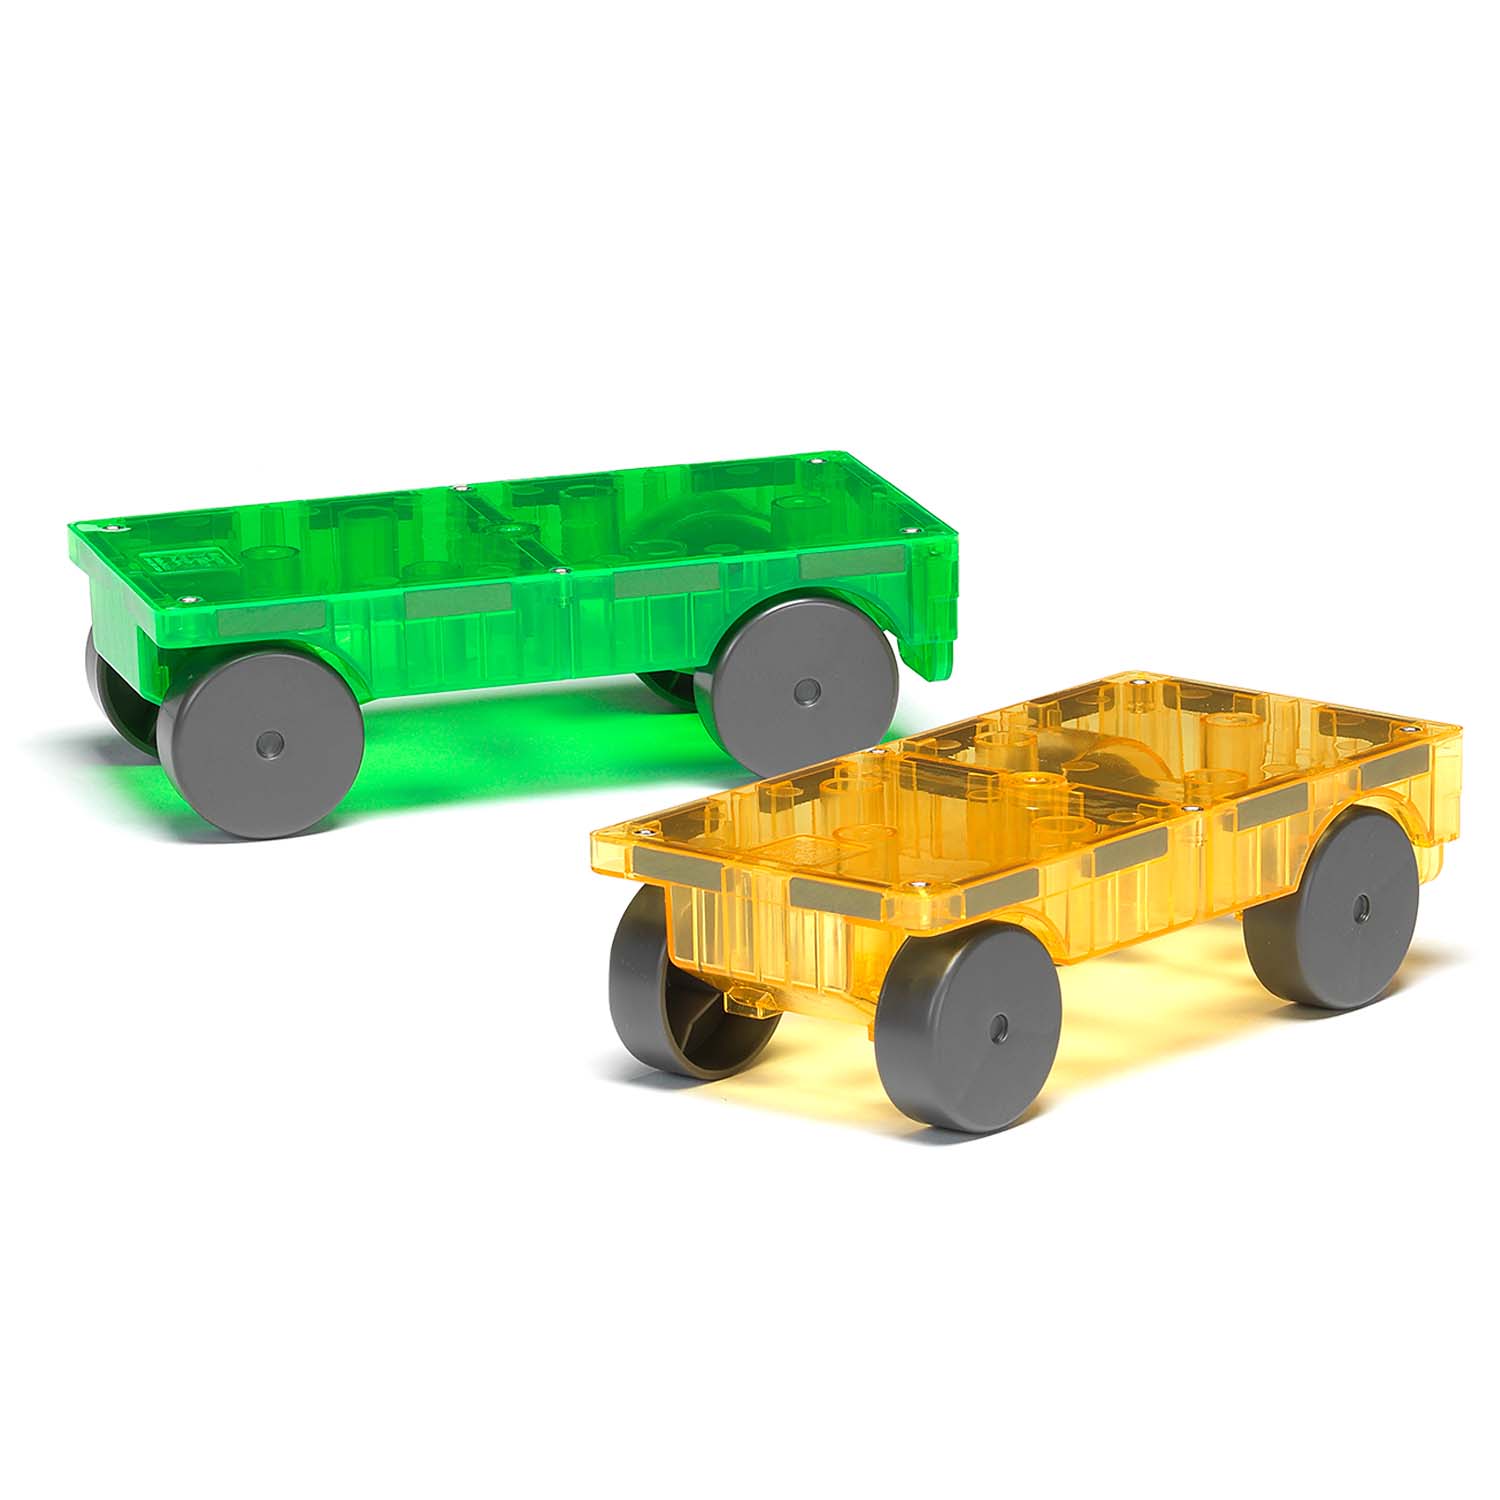 Magna-Tiles® Cars Expansion Set, Green & Yellow